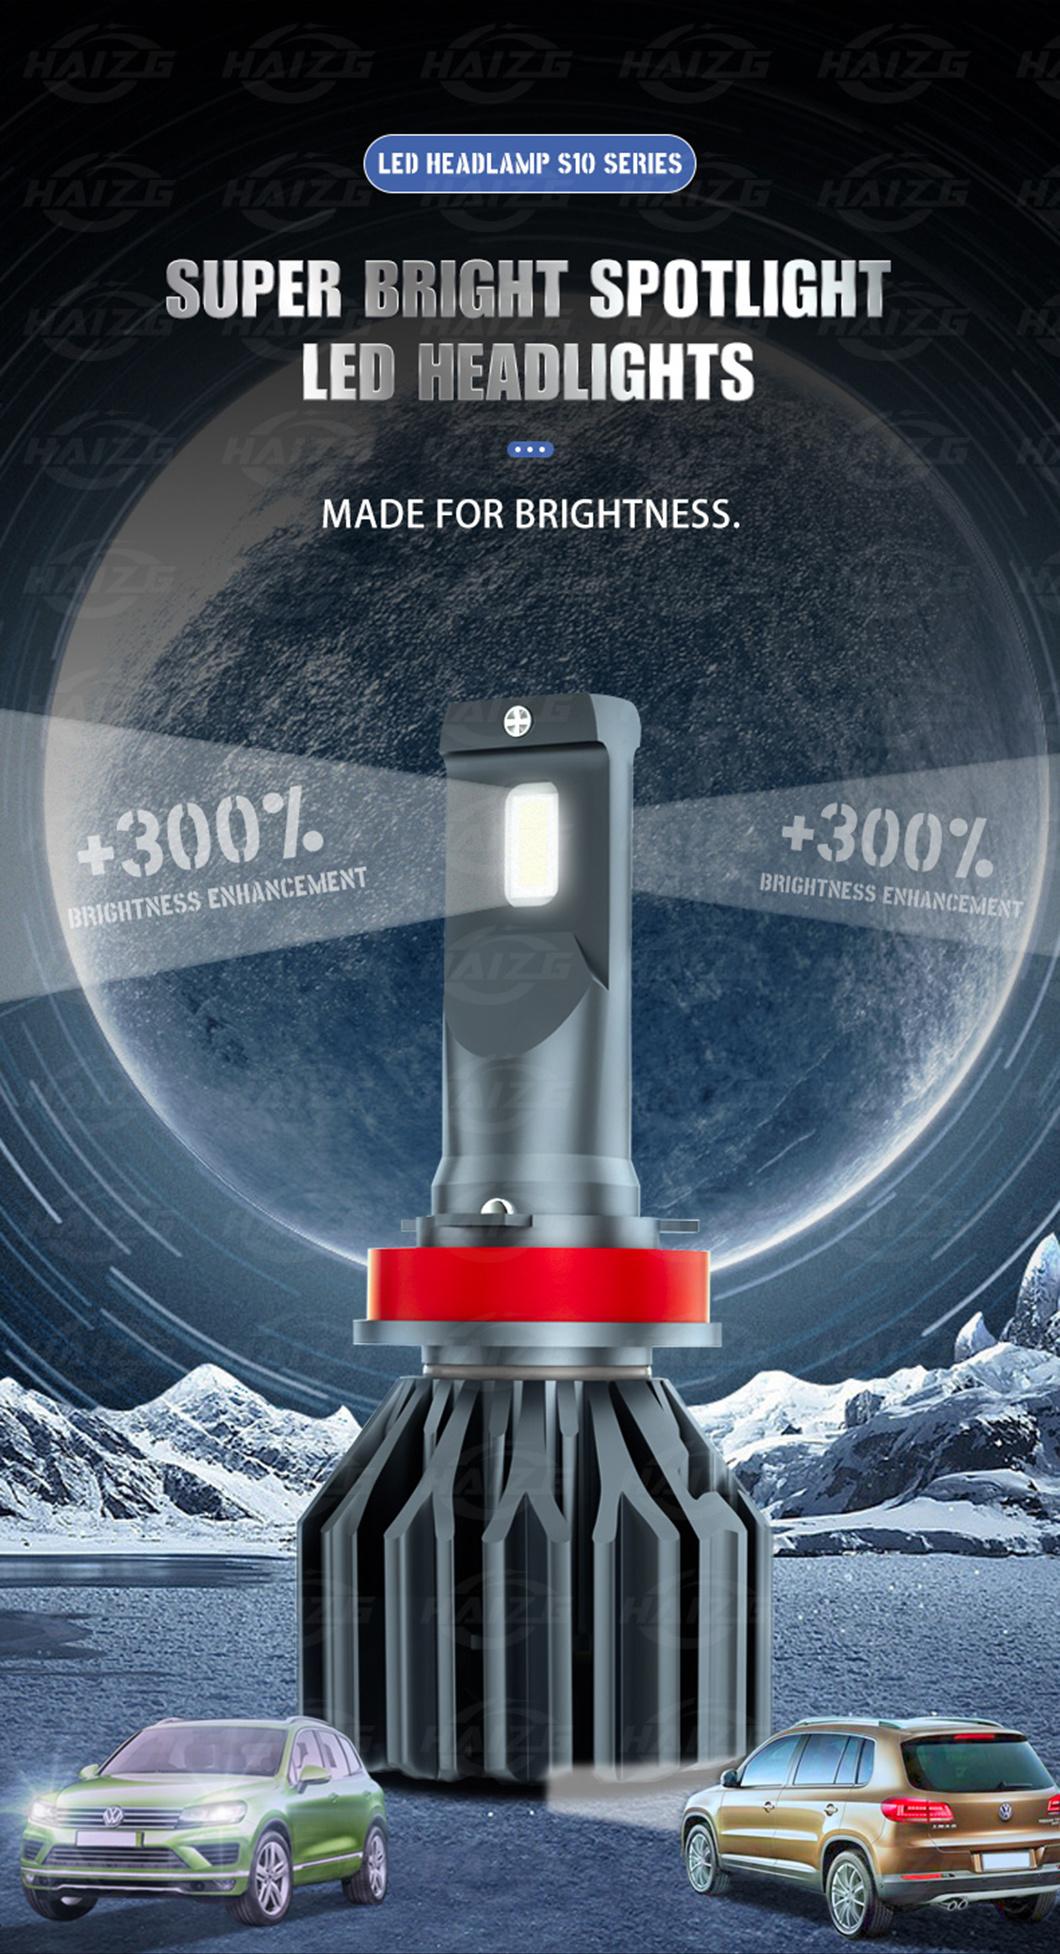 Haizg High Quality LED Headlight 55W H4 H7 H8 H11 9005 9006 LED Headlight H11